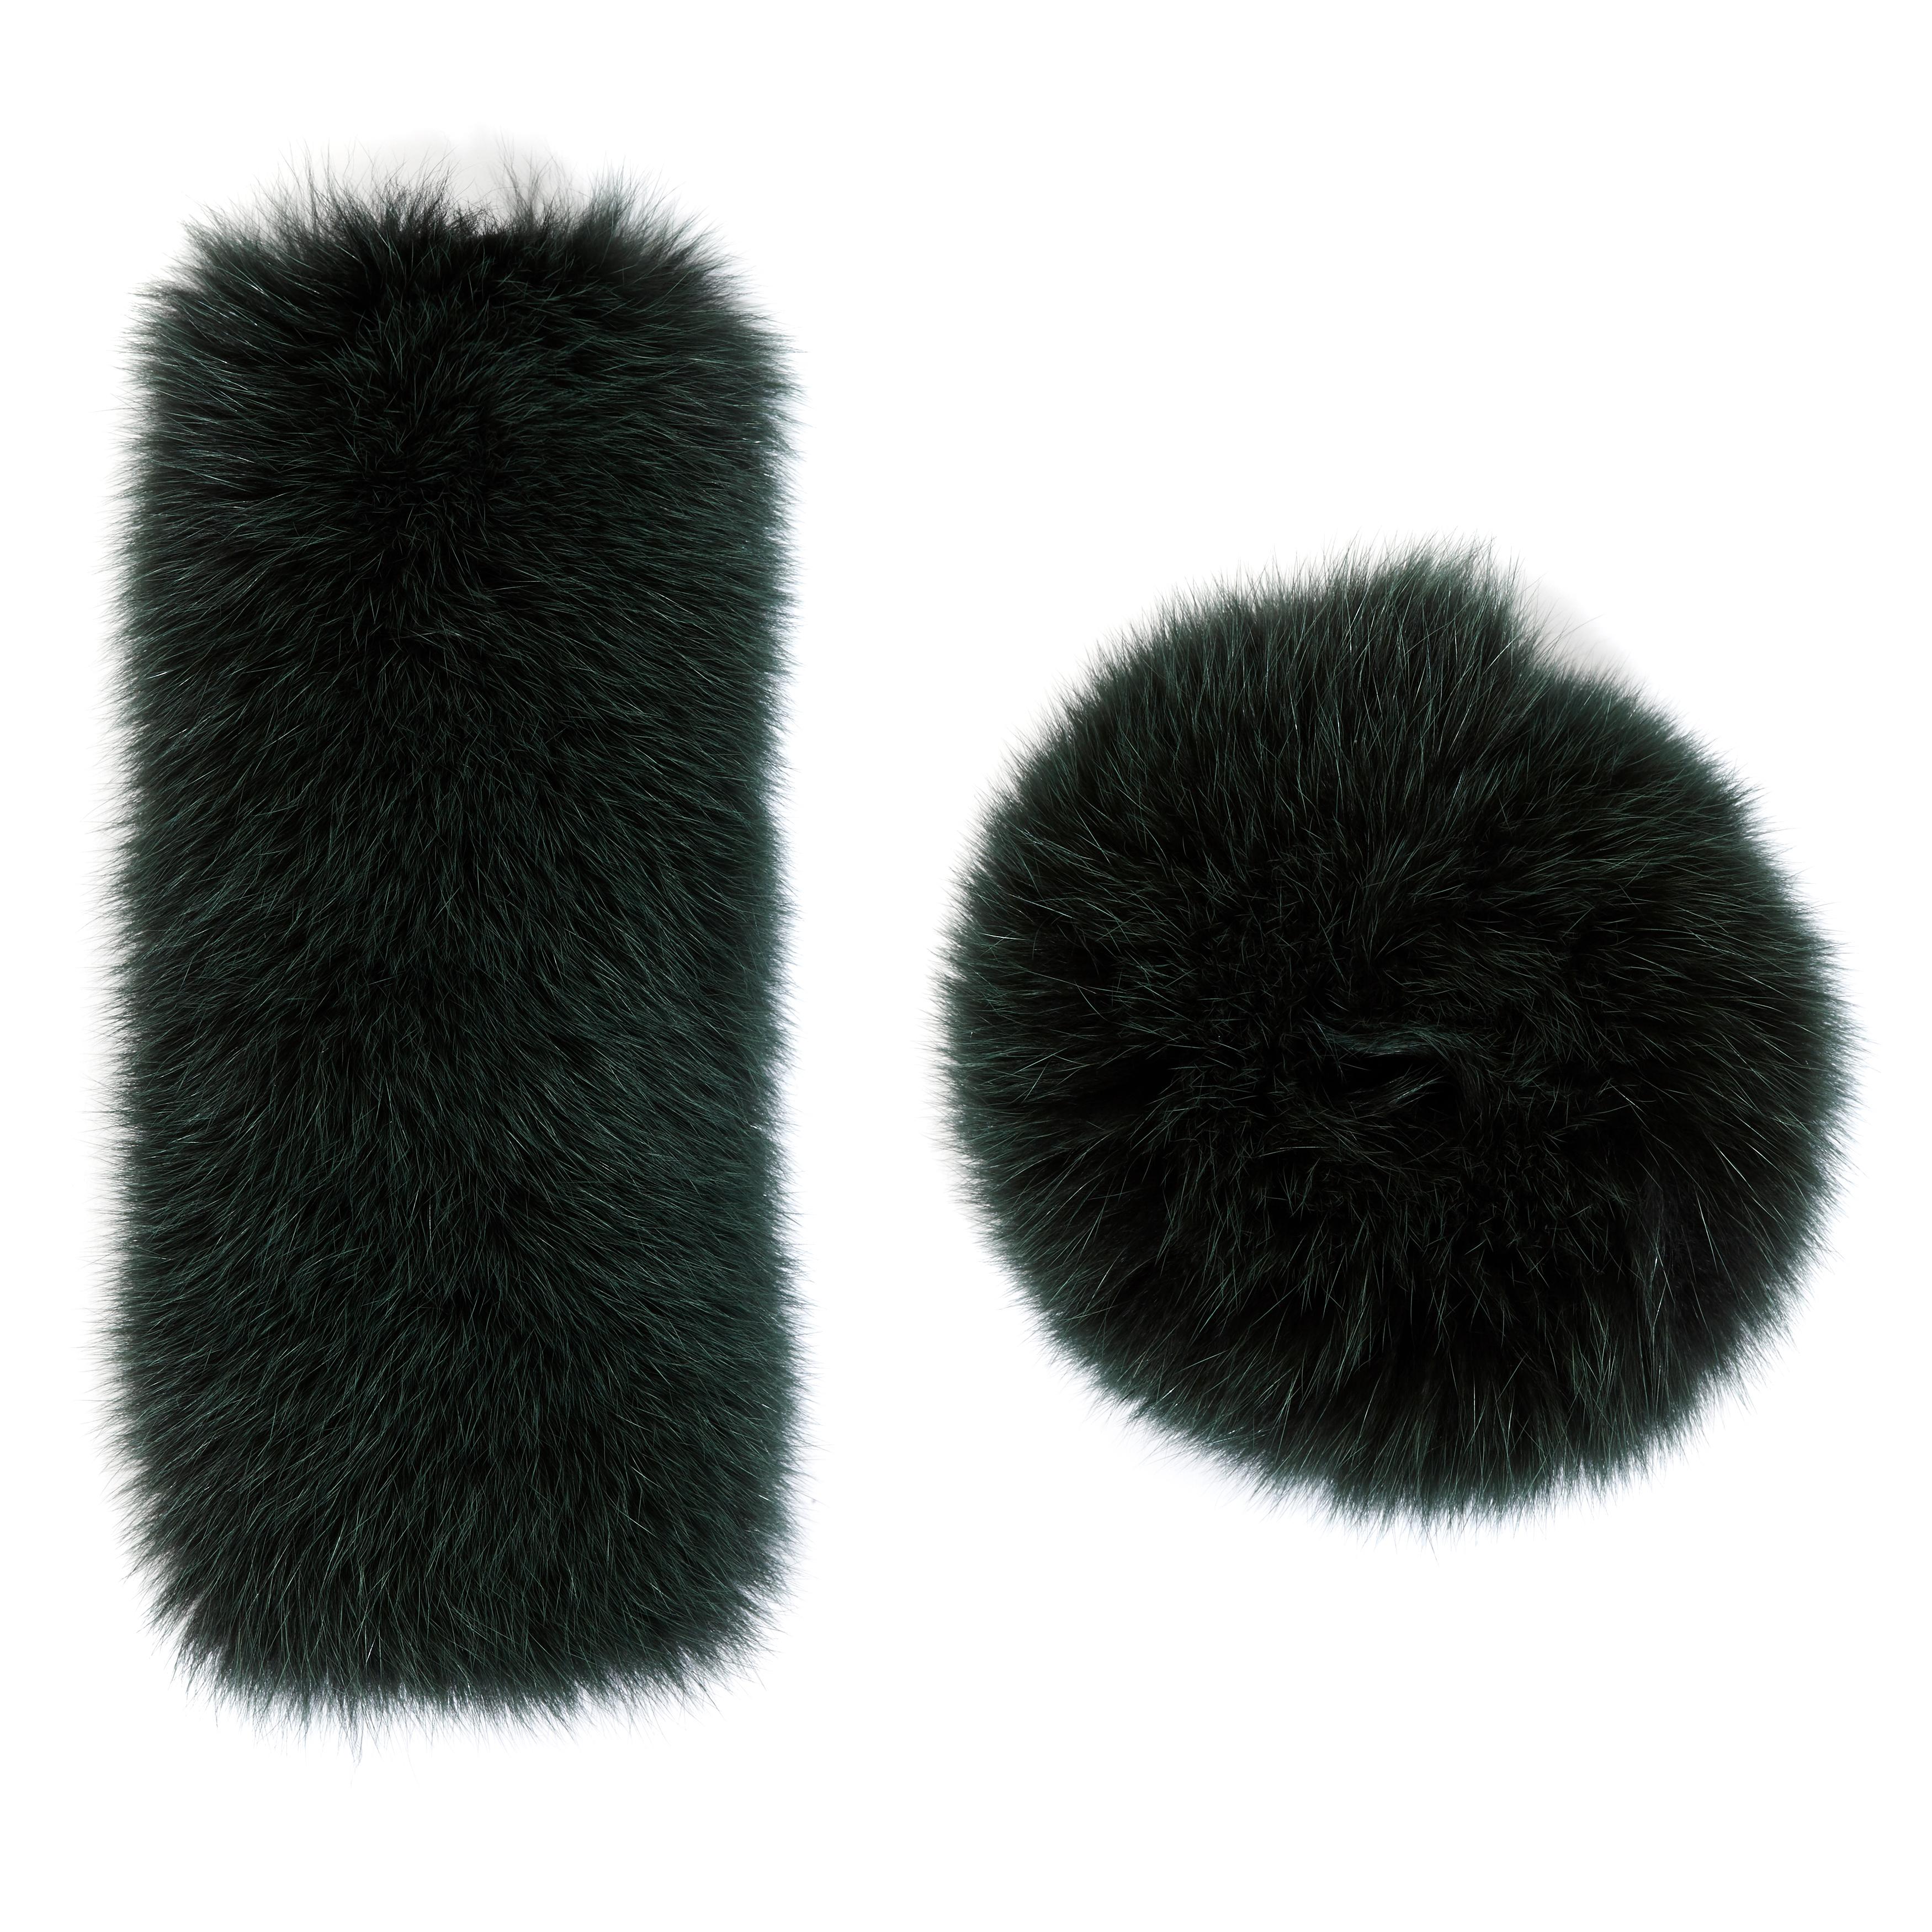 Verheyen London Large Pair of Snap on Fox Fur Cuffs in Winter Green